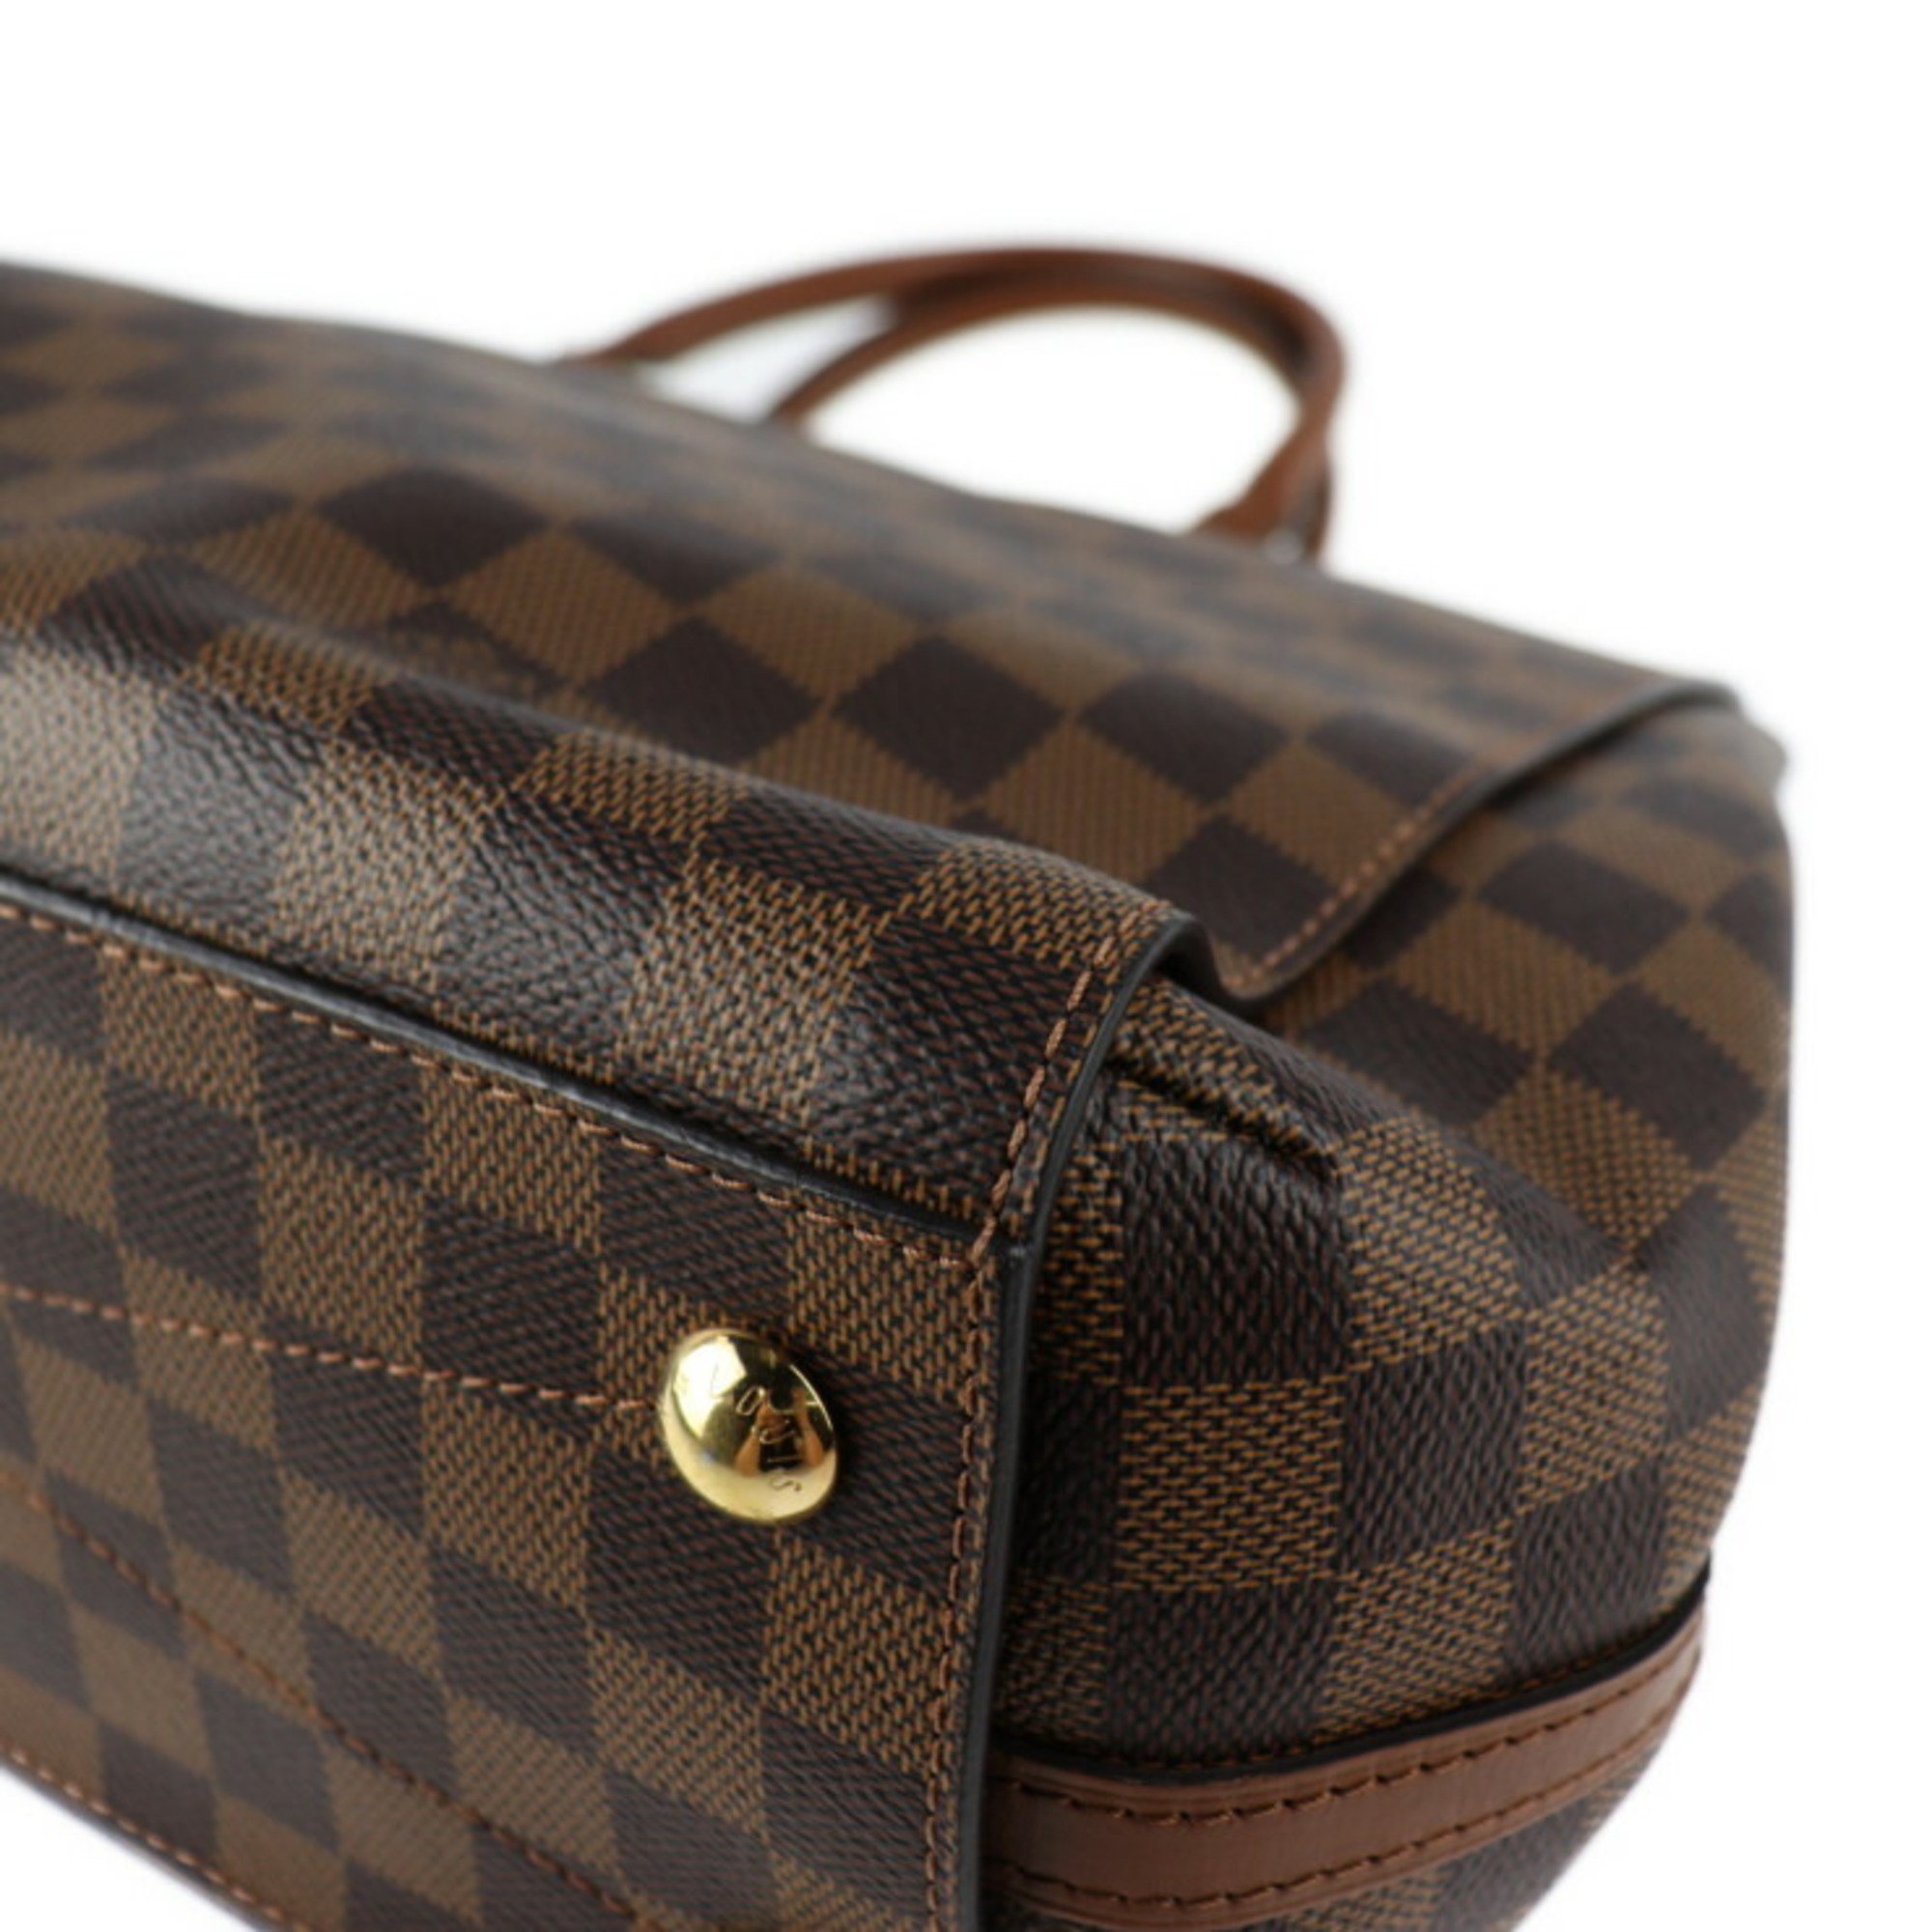 LOUIS VUITTON Louis Vuitton Greenwich Handbag N41337 Damier Canvas Brown 2way Shoulder Bag